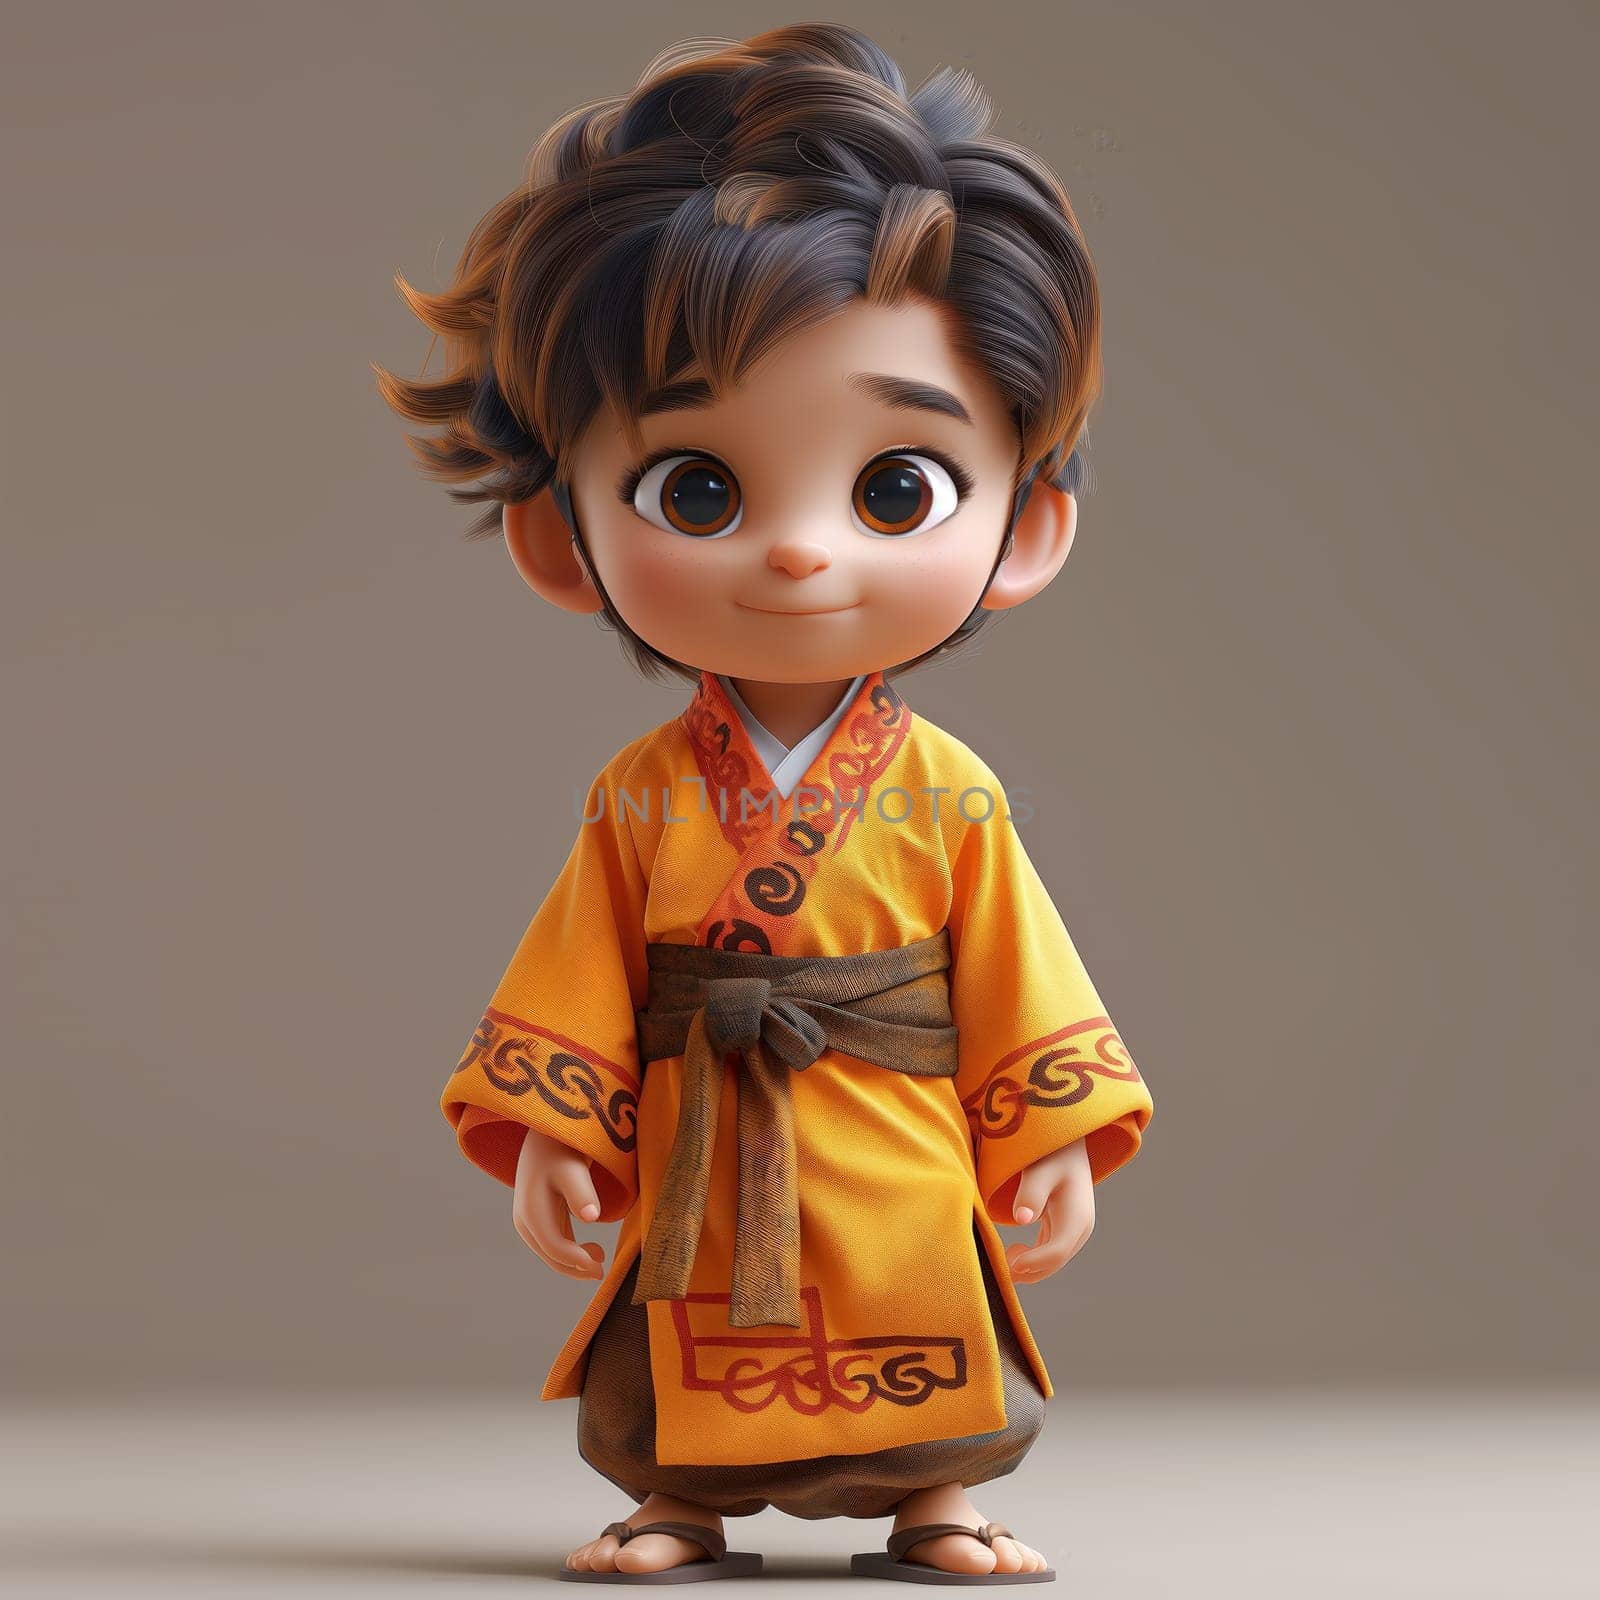 Cartoon, 3D boy in national traditional Asian attire. by Fischeron